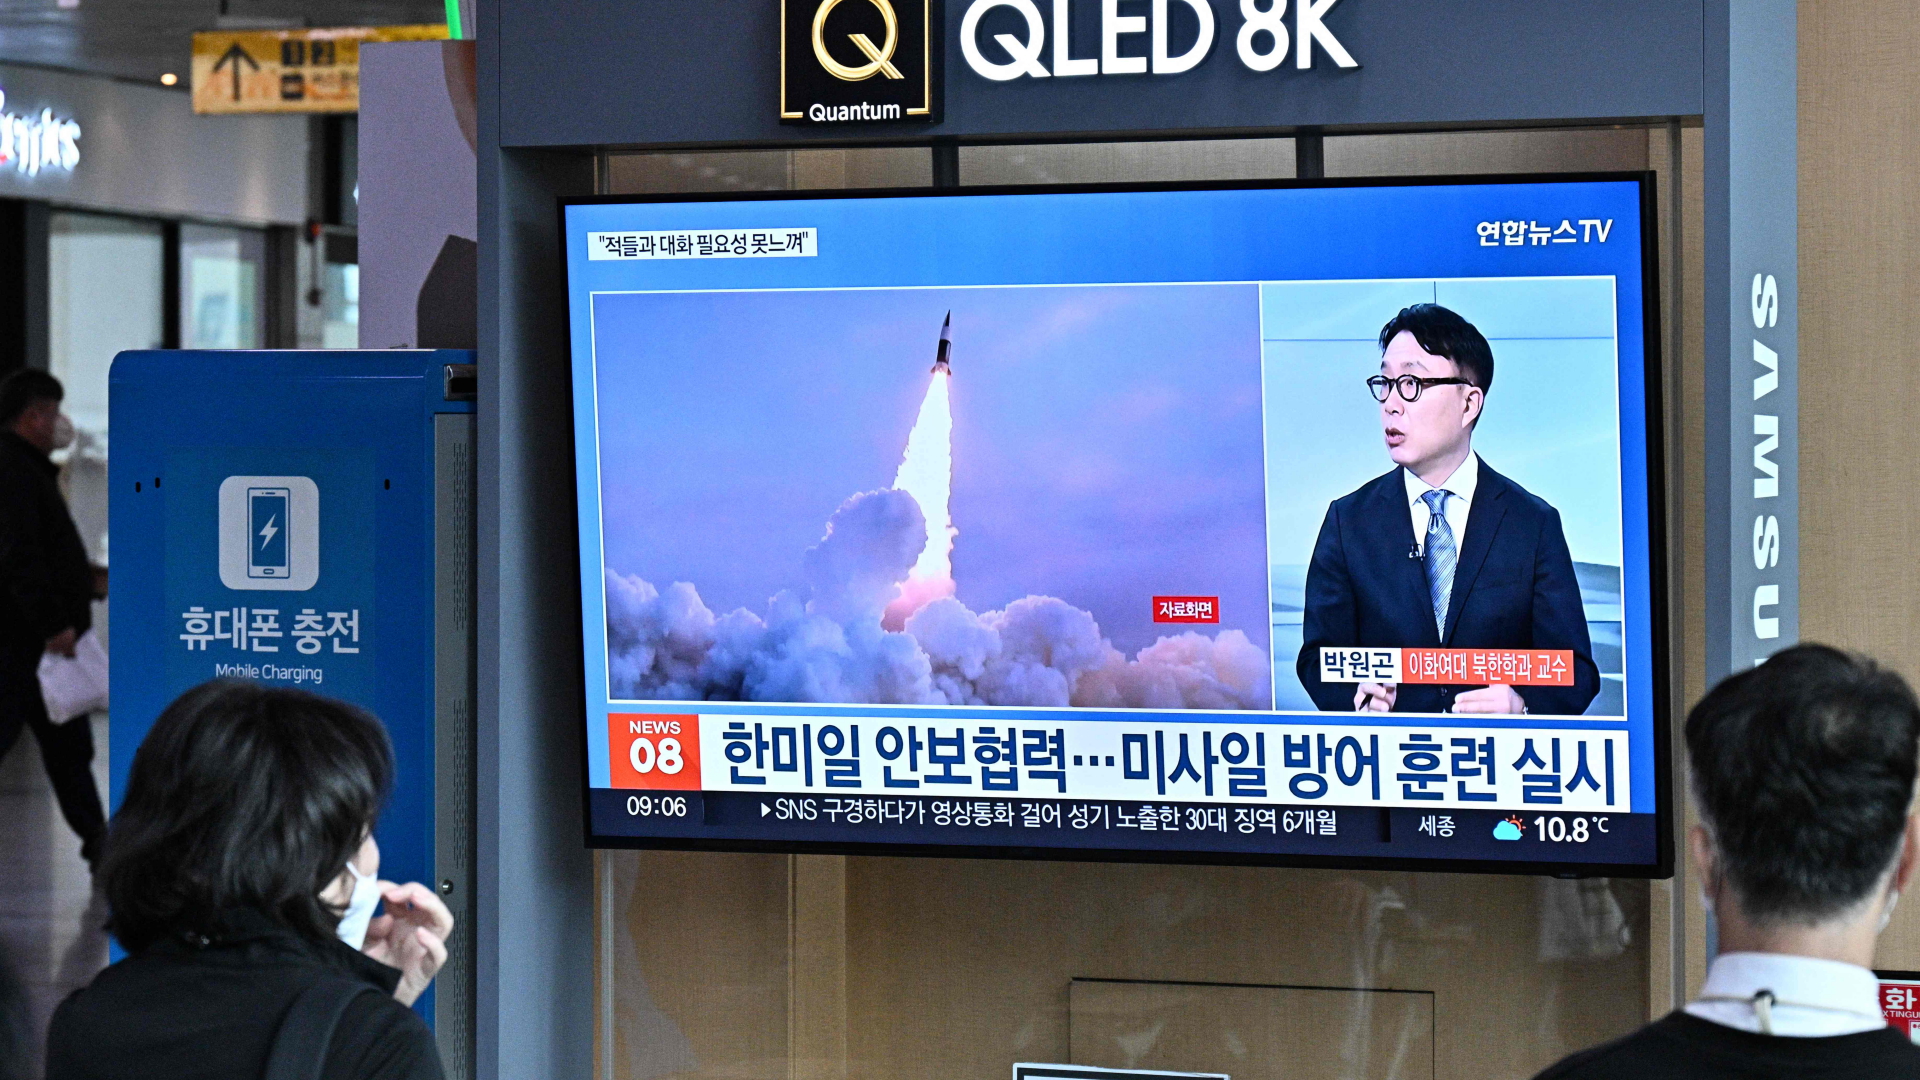 Nordkorea: Raketentests waren “taktische Nuklearübungen”